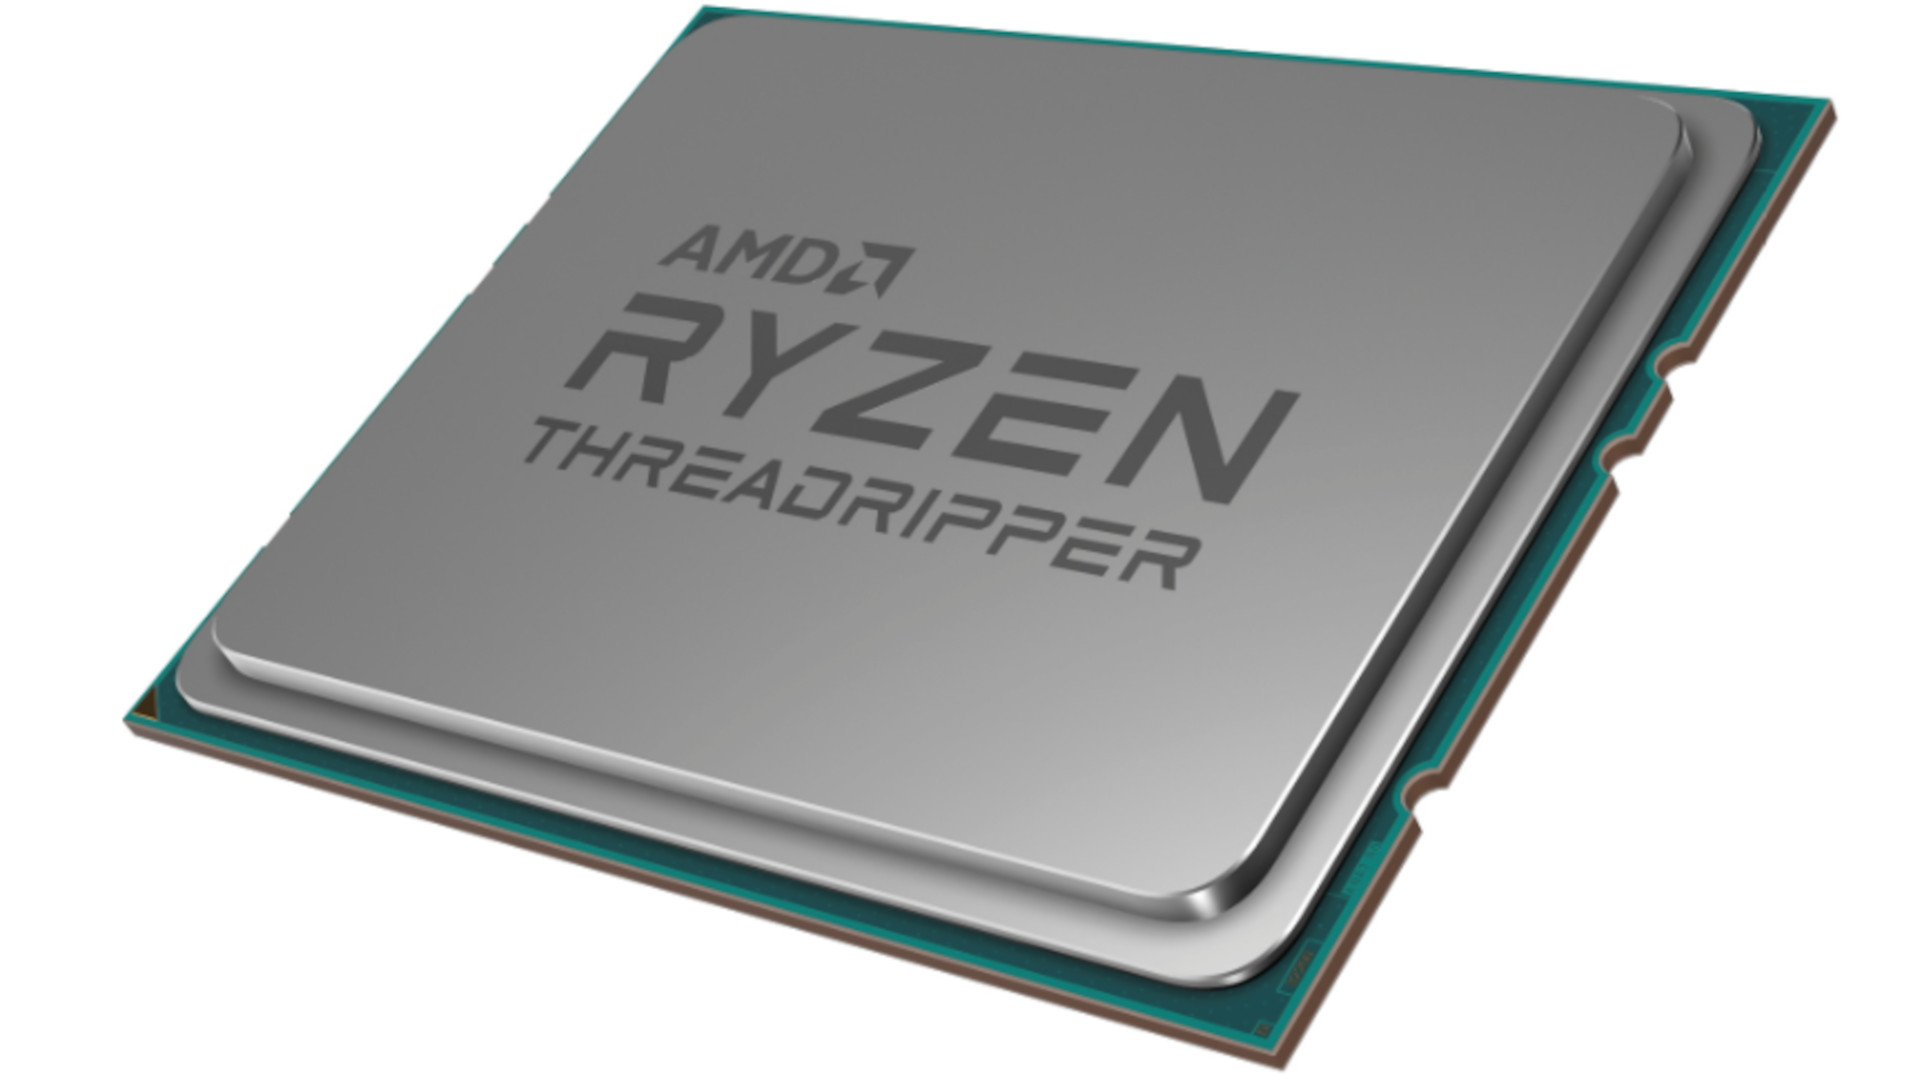 AMD Ryzen TR 2920X 3